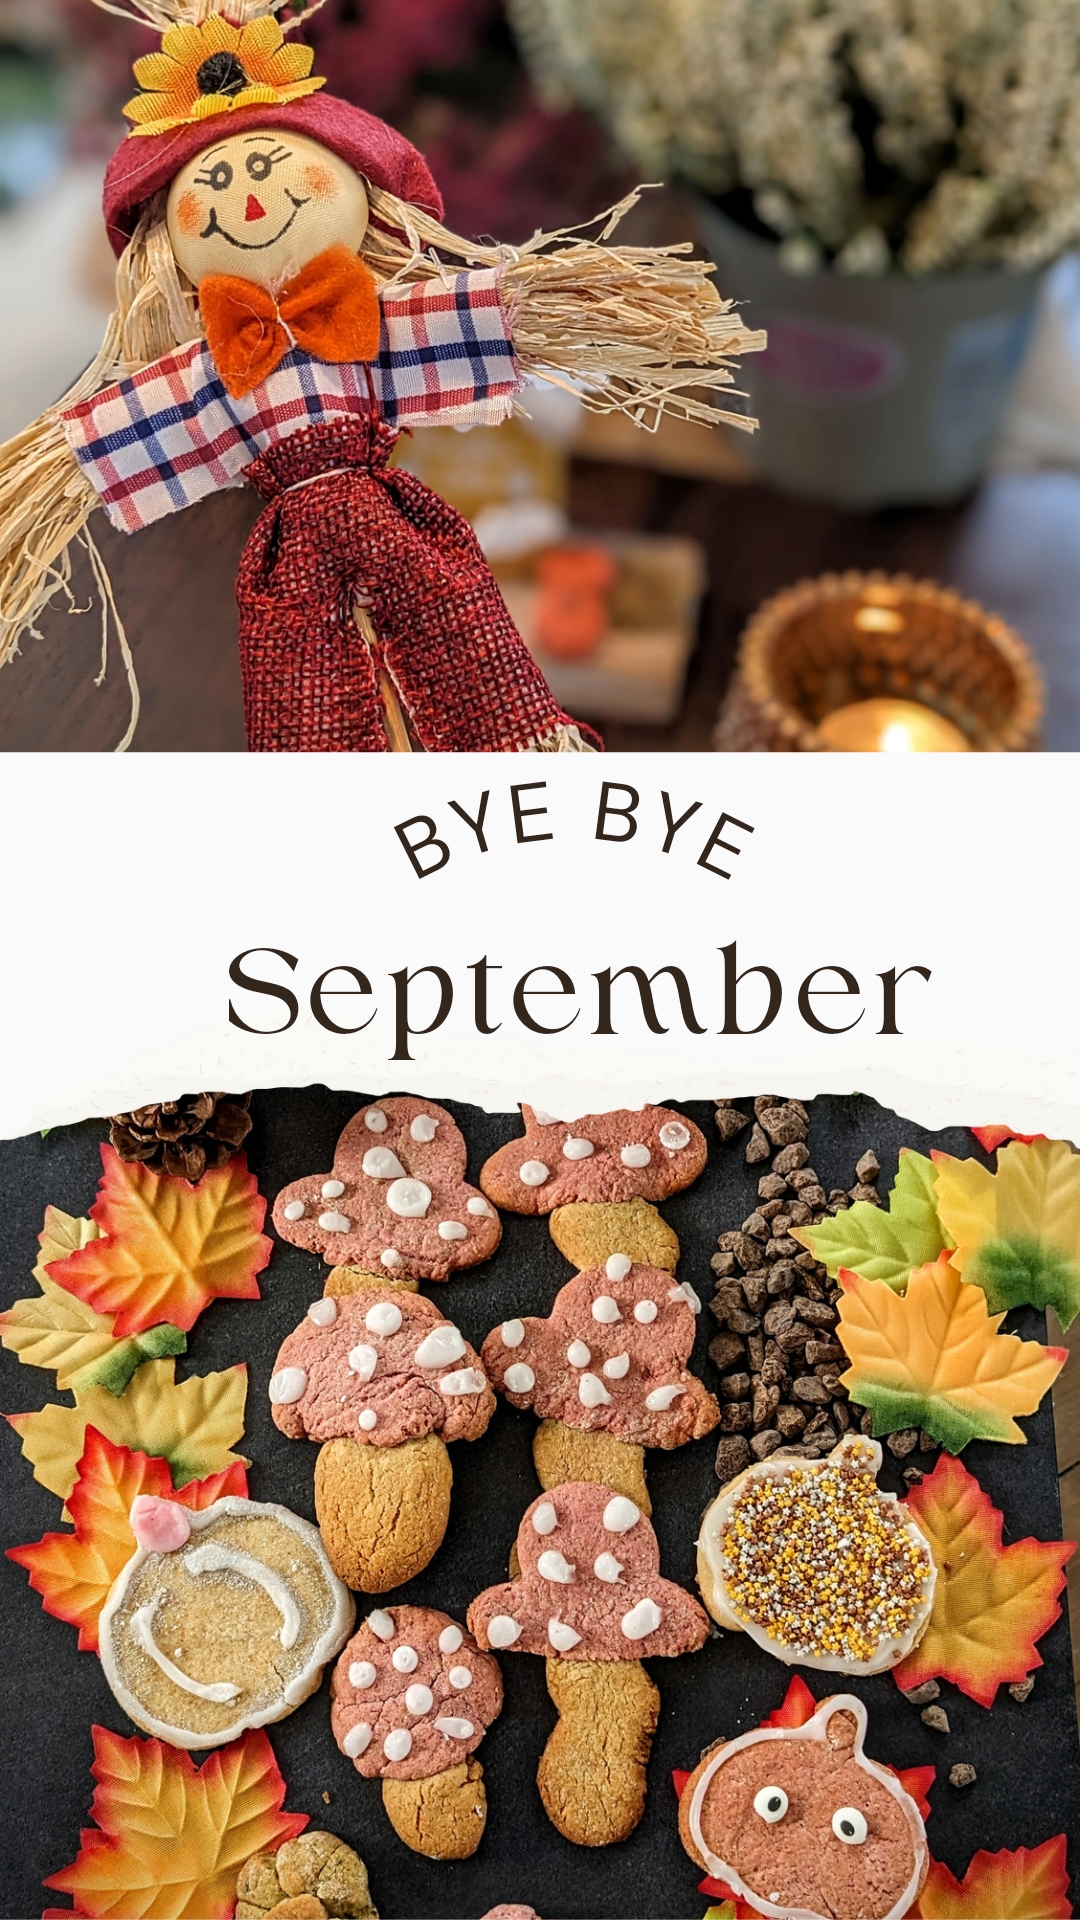 Bye Bye September.
Als Herbstmensch mein Lieblingsmonat neben dem Oktober.🍁🍄🦔🍂🧡🥜
#herbst #deko #food #kürbis